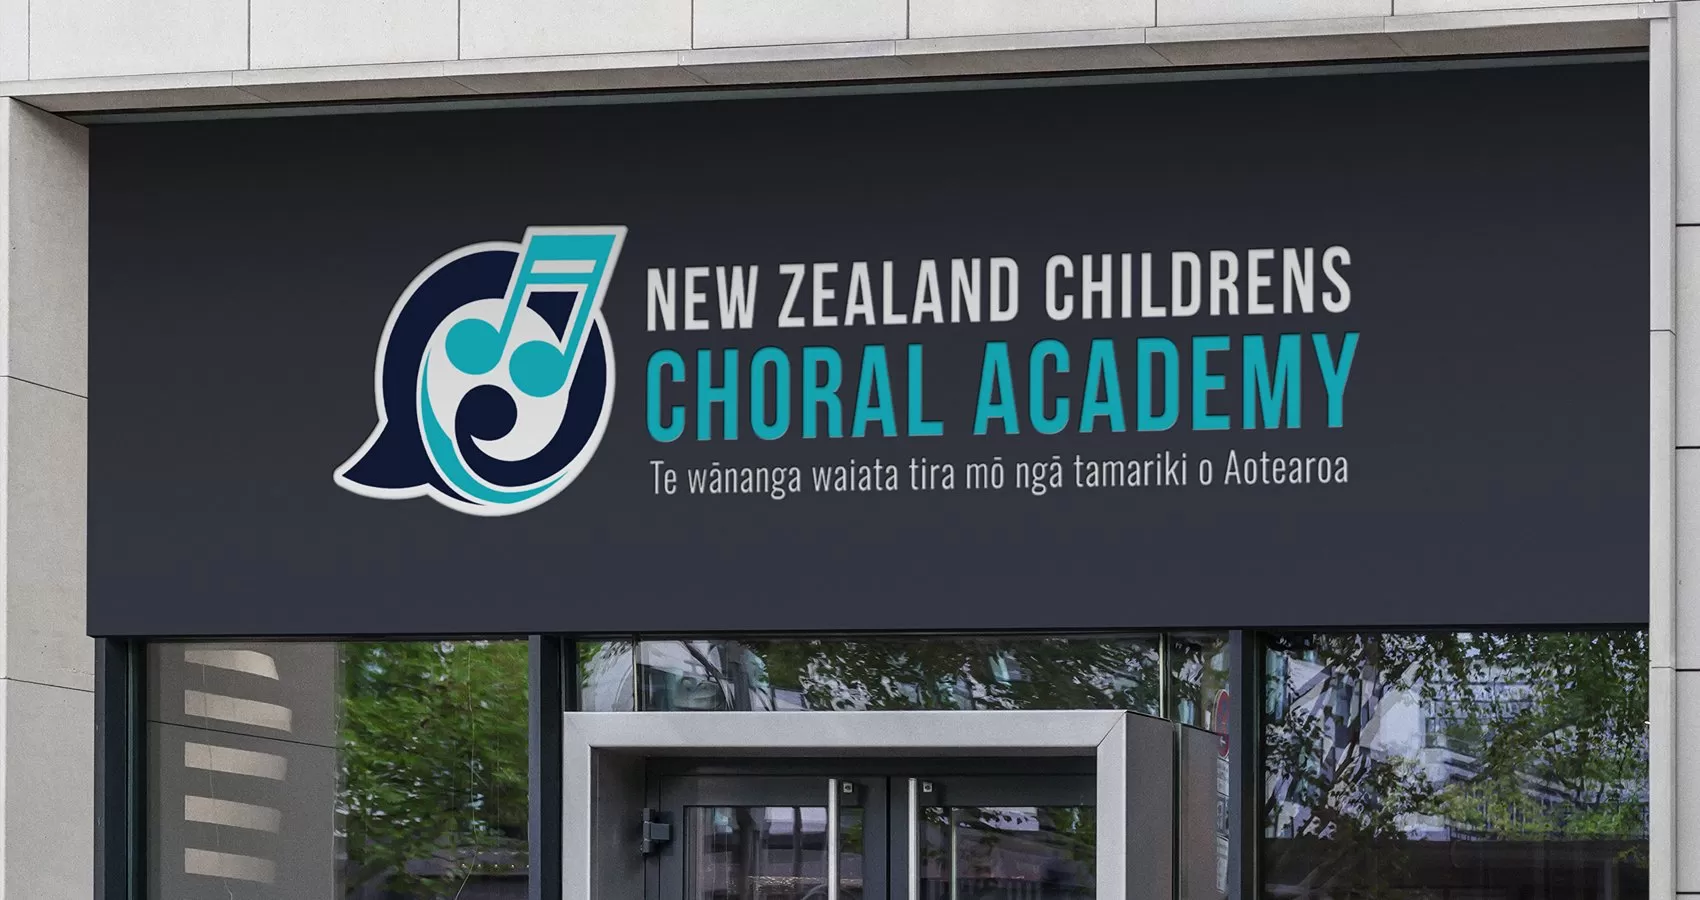 New Zealand Childrens Choral Academy design case study